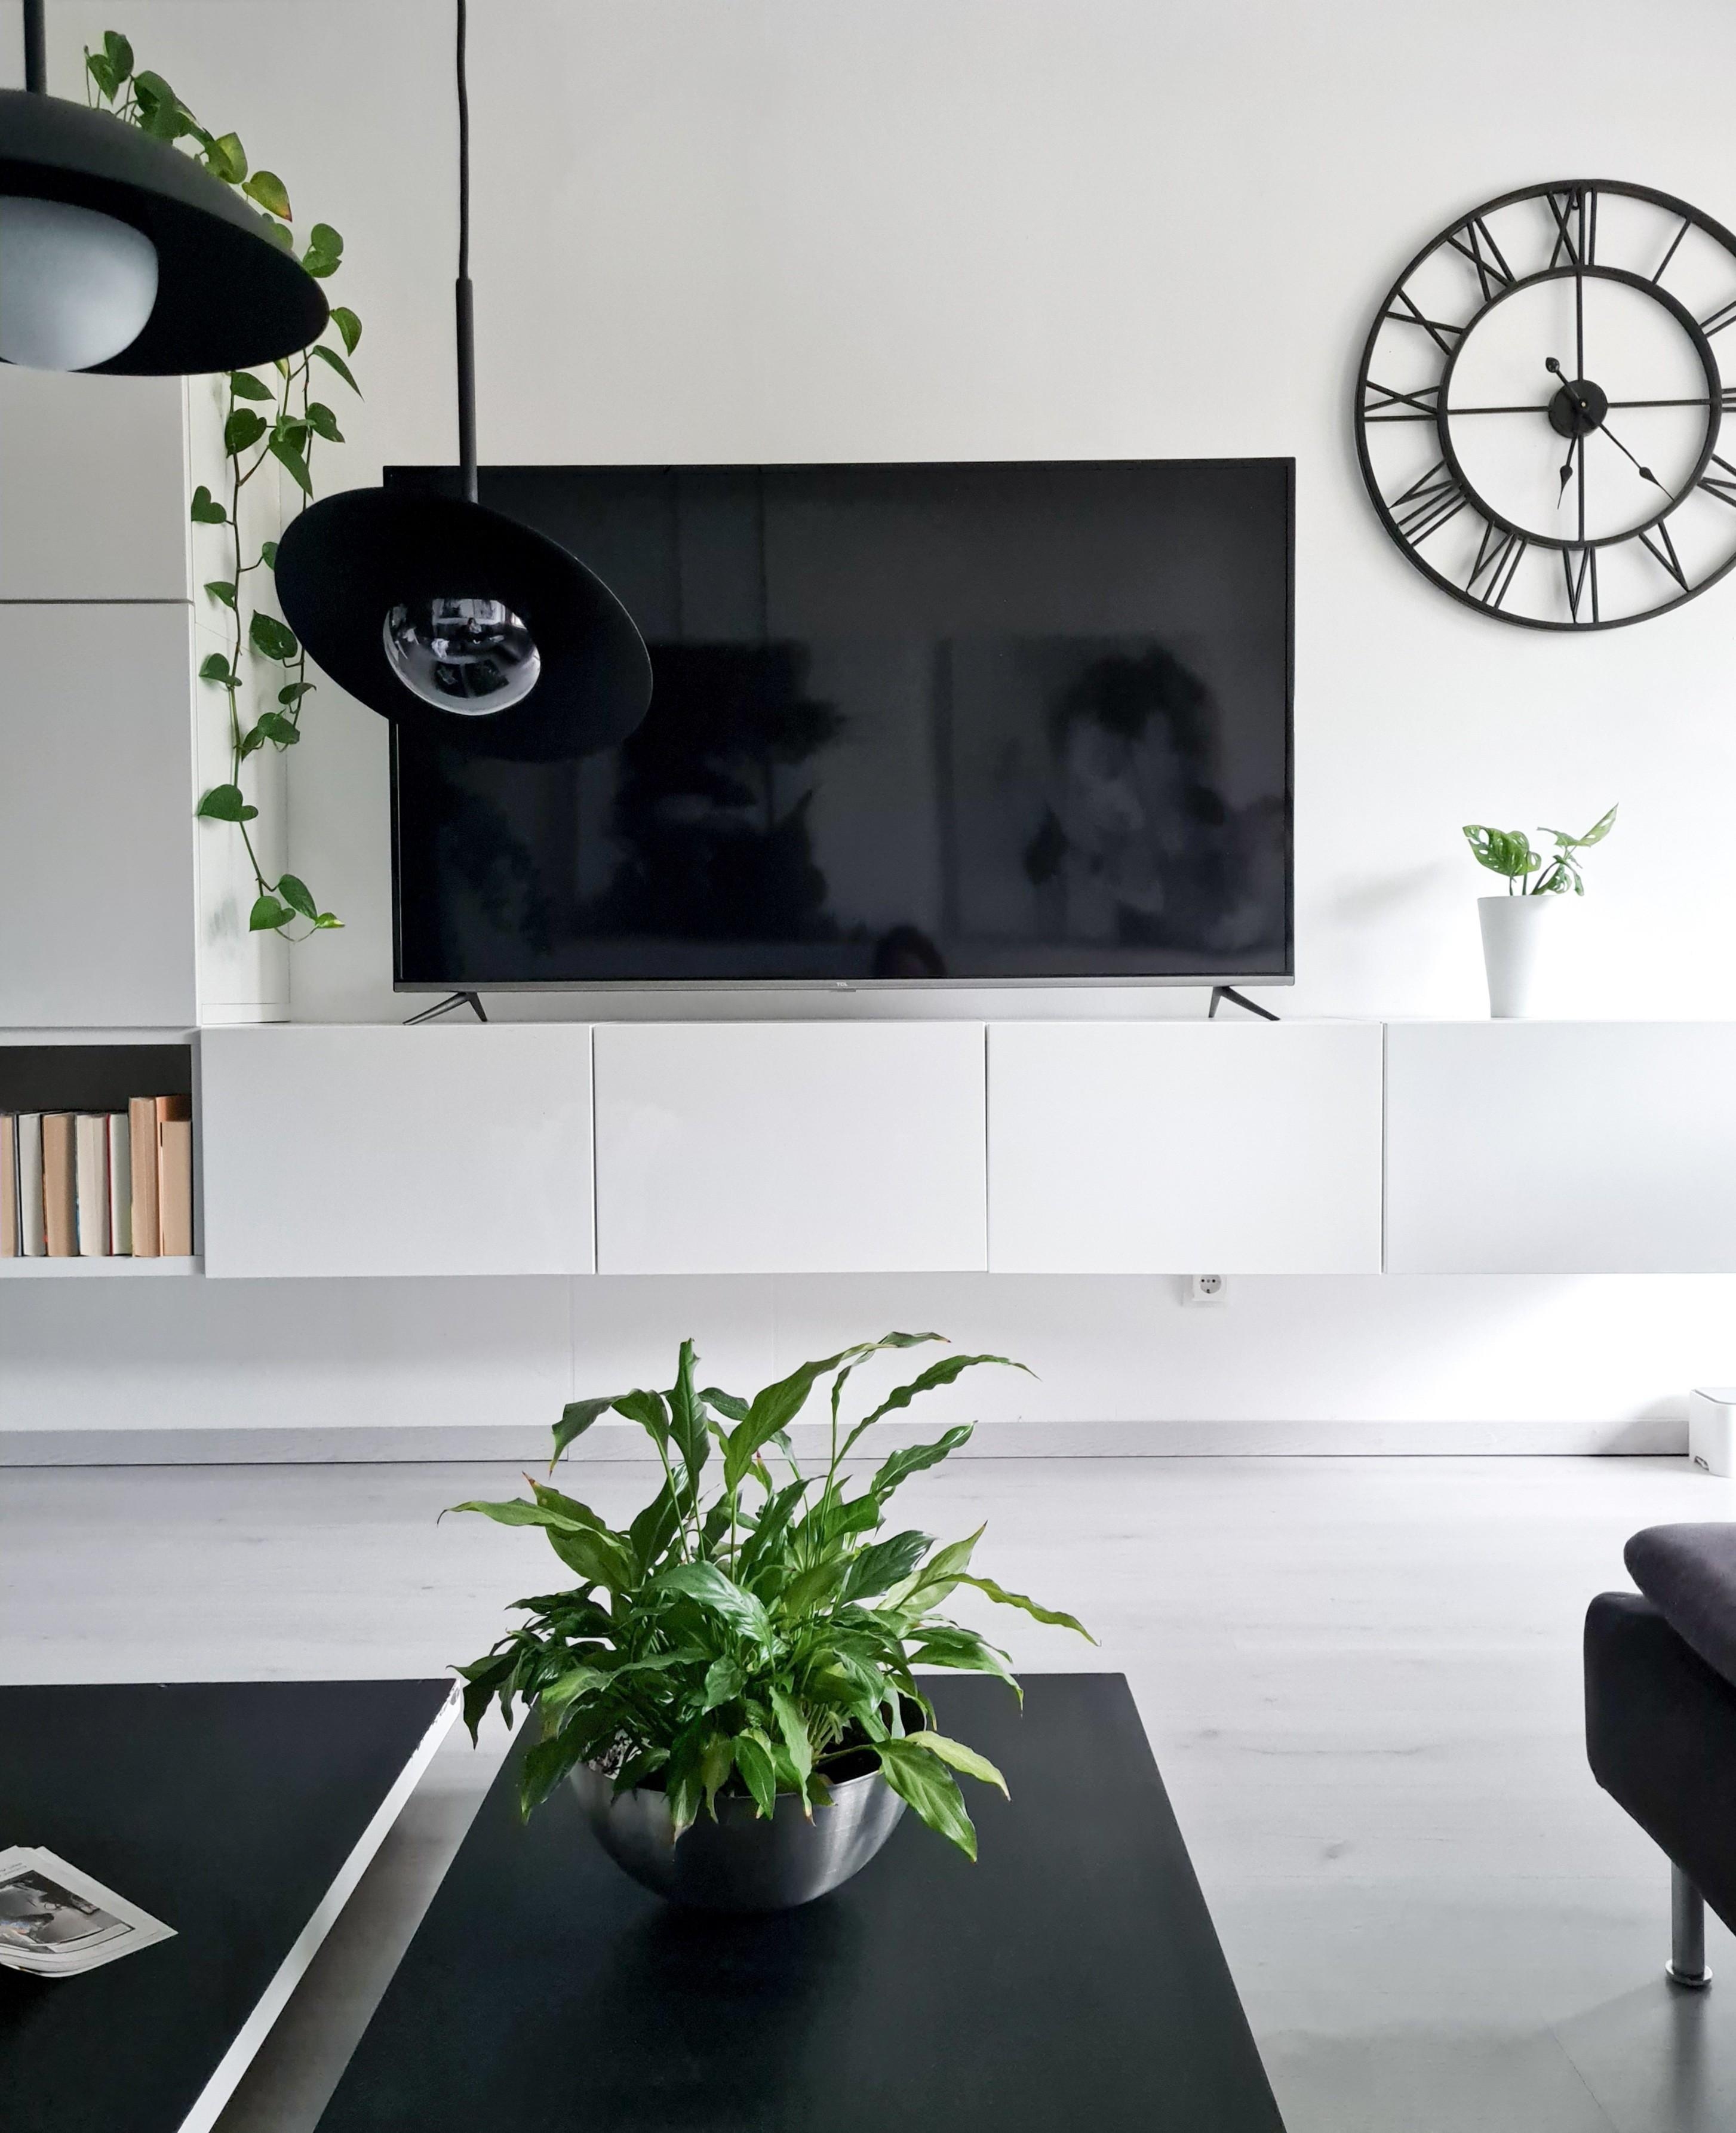 White home ♡
#wohnzimmer #livingroom #clean #nordic #minimalism #minimalismhome #plantlover